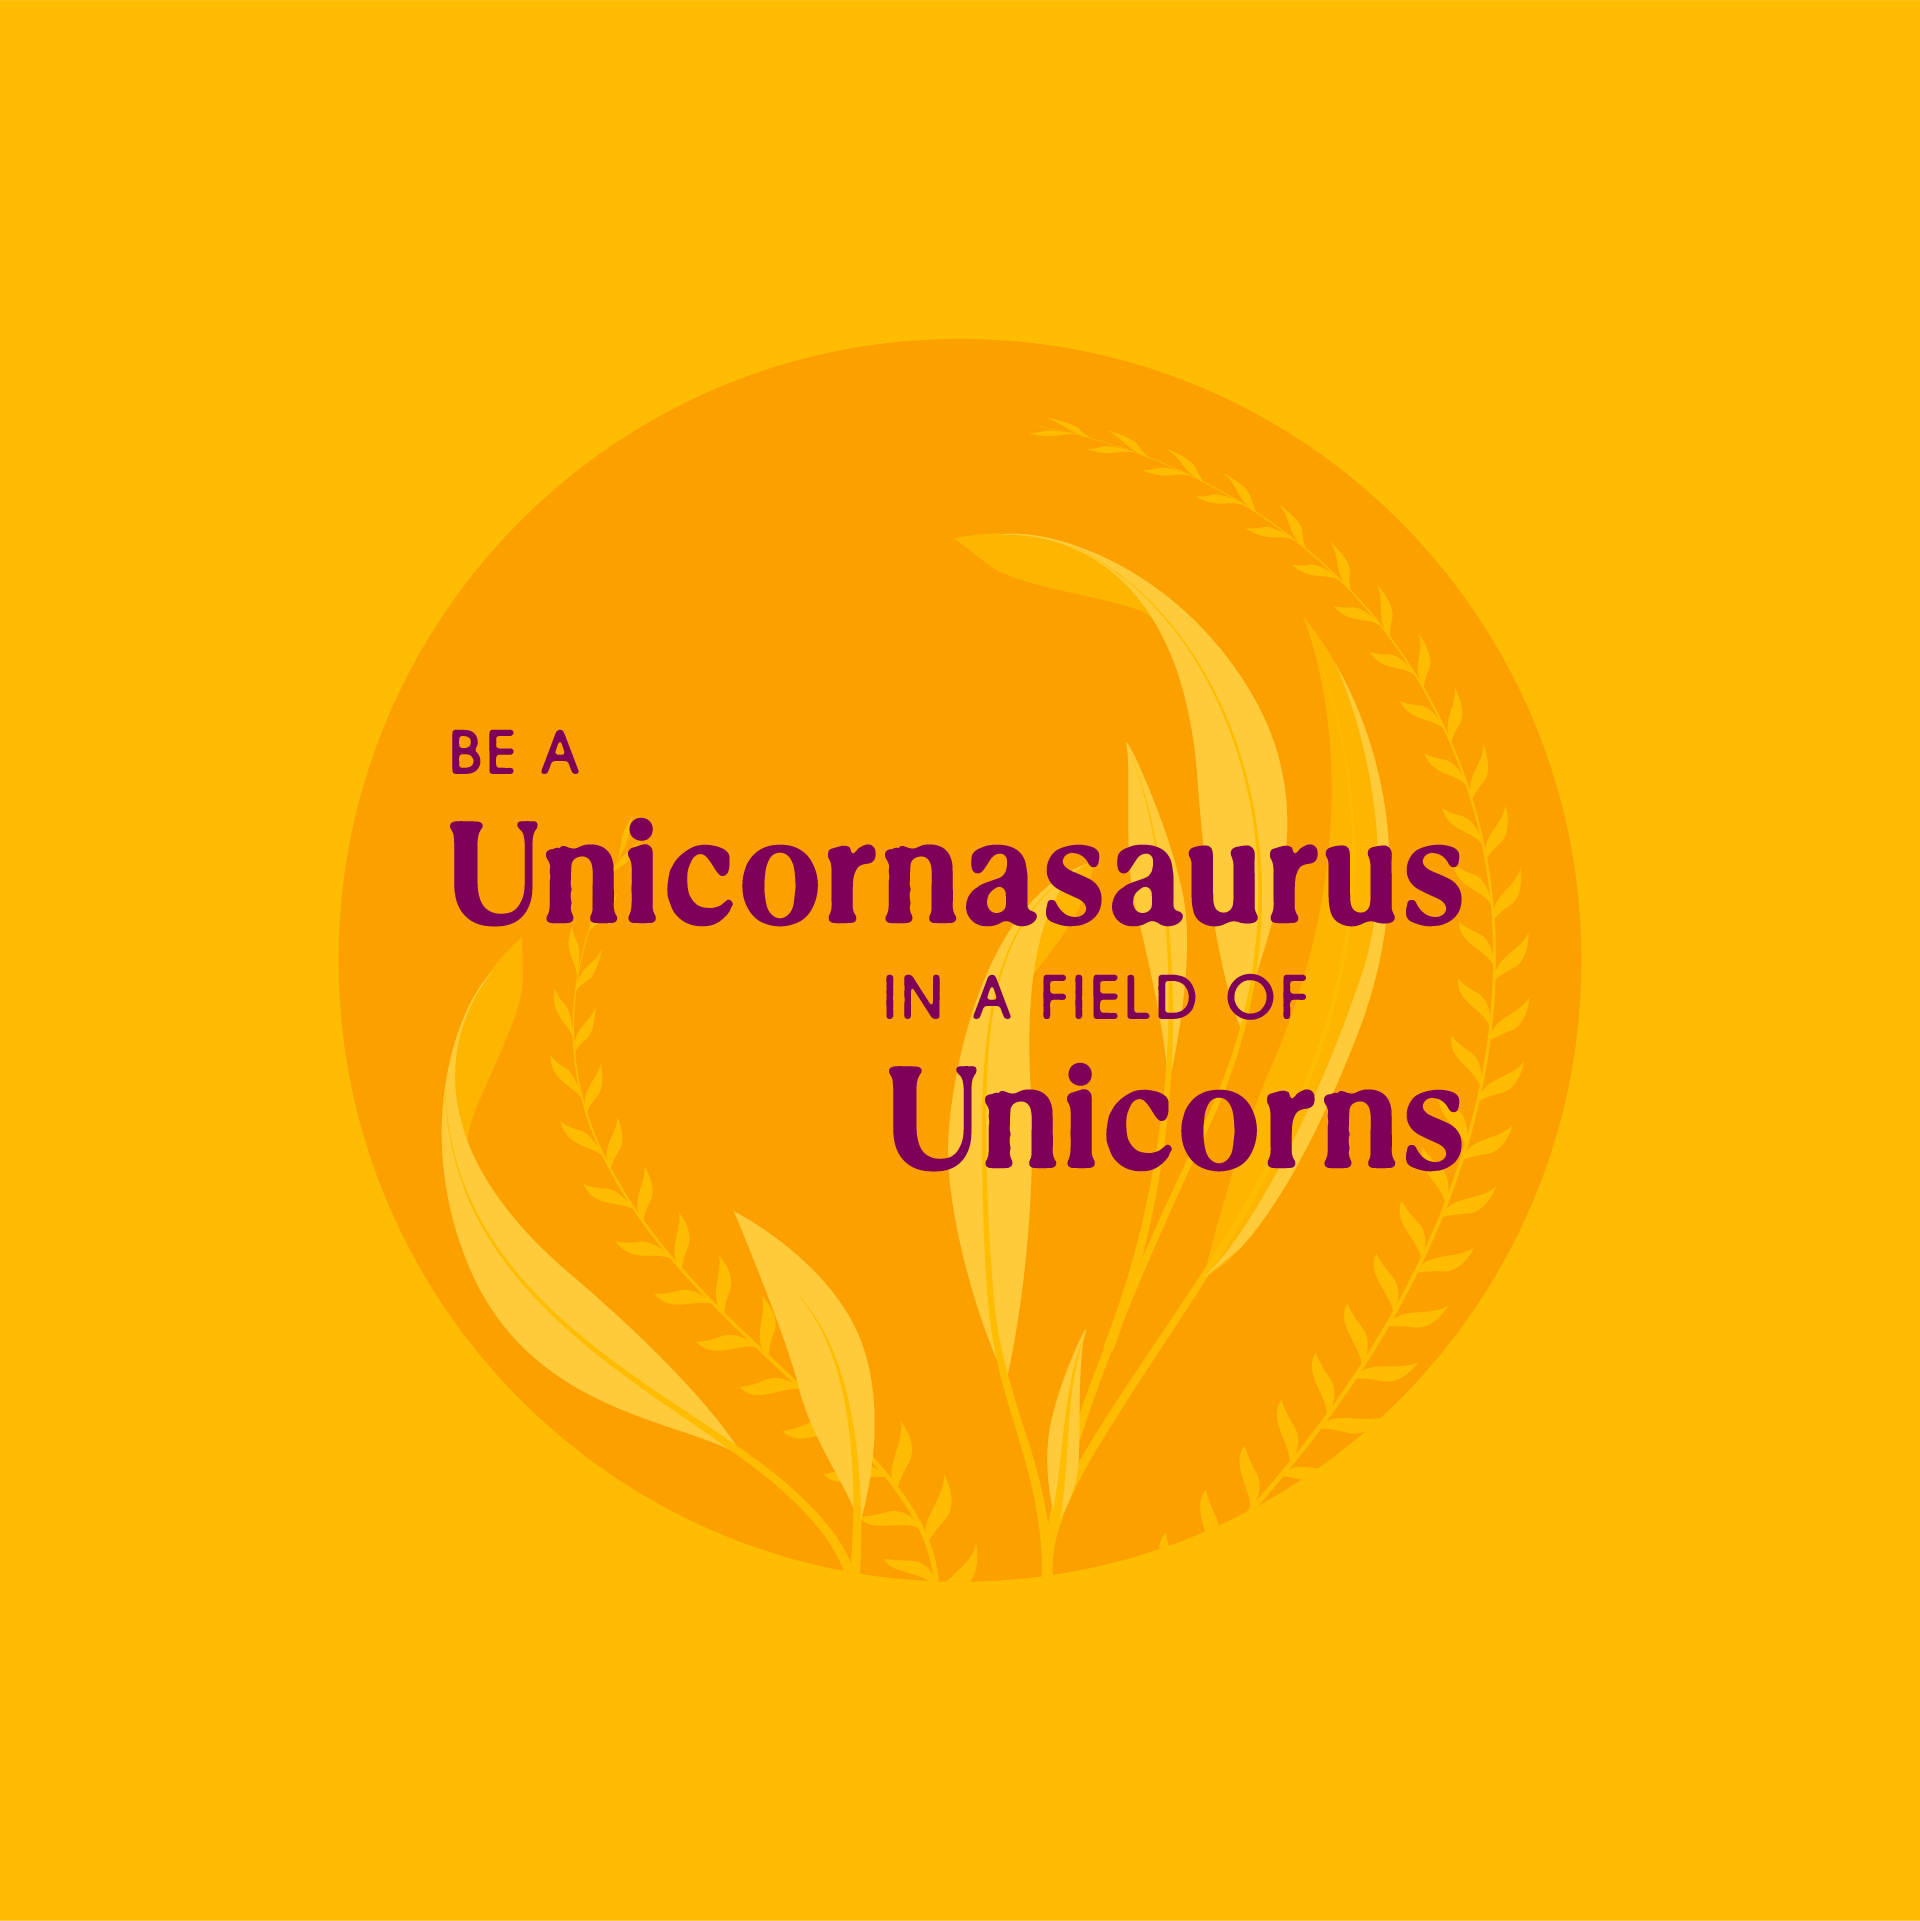 Be a Unicornasaurus in a field of unicorns